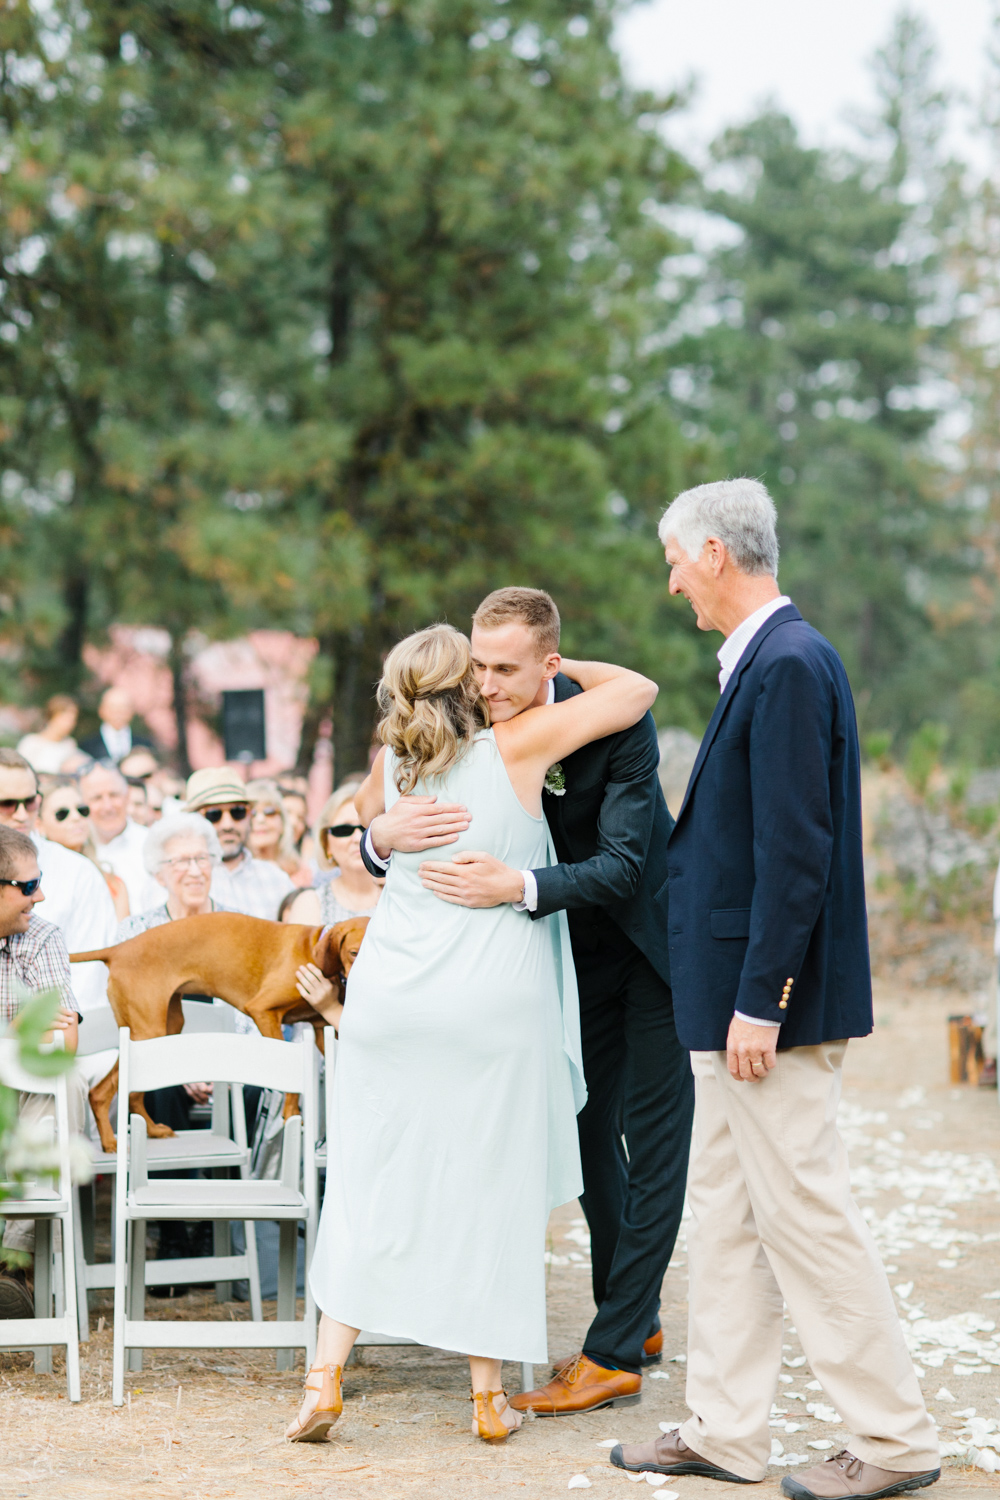 Grey and White Wedding in the Mountains of Leavenworth, Washington | Sleeping Lady | Classic and Timeless Wedding | VSCO | Leavenworth Wedding Ceremony at Sleeping Lady.jpg-2857.jpg